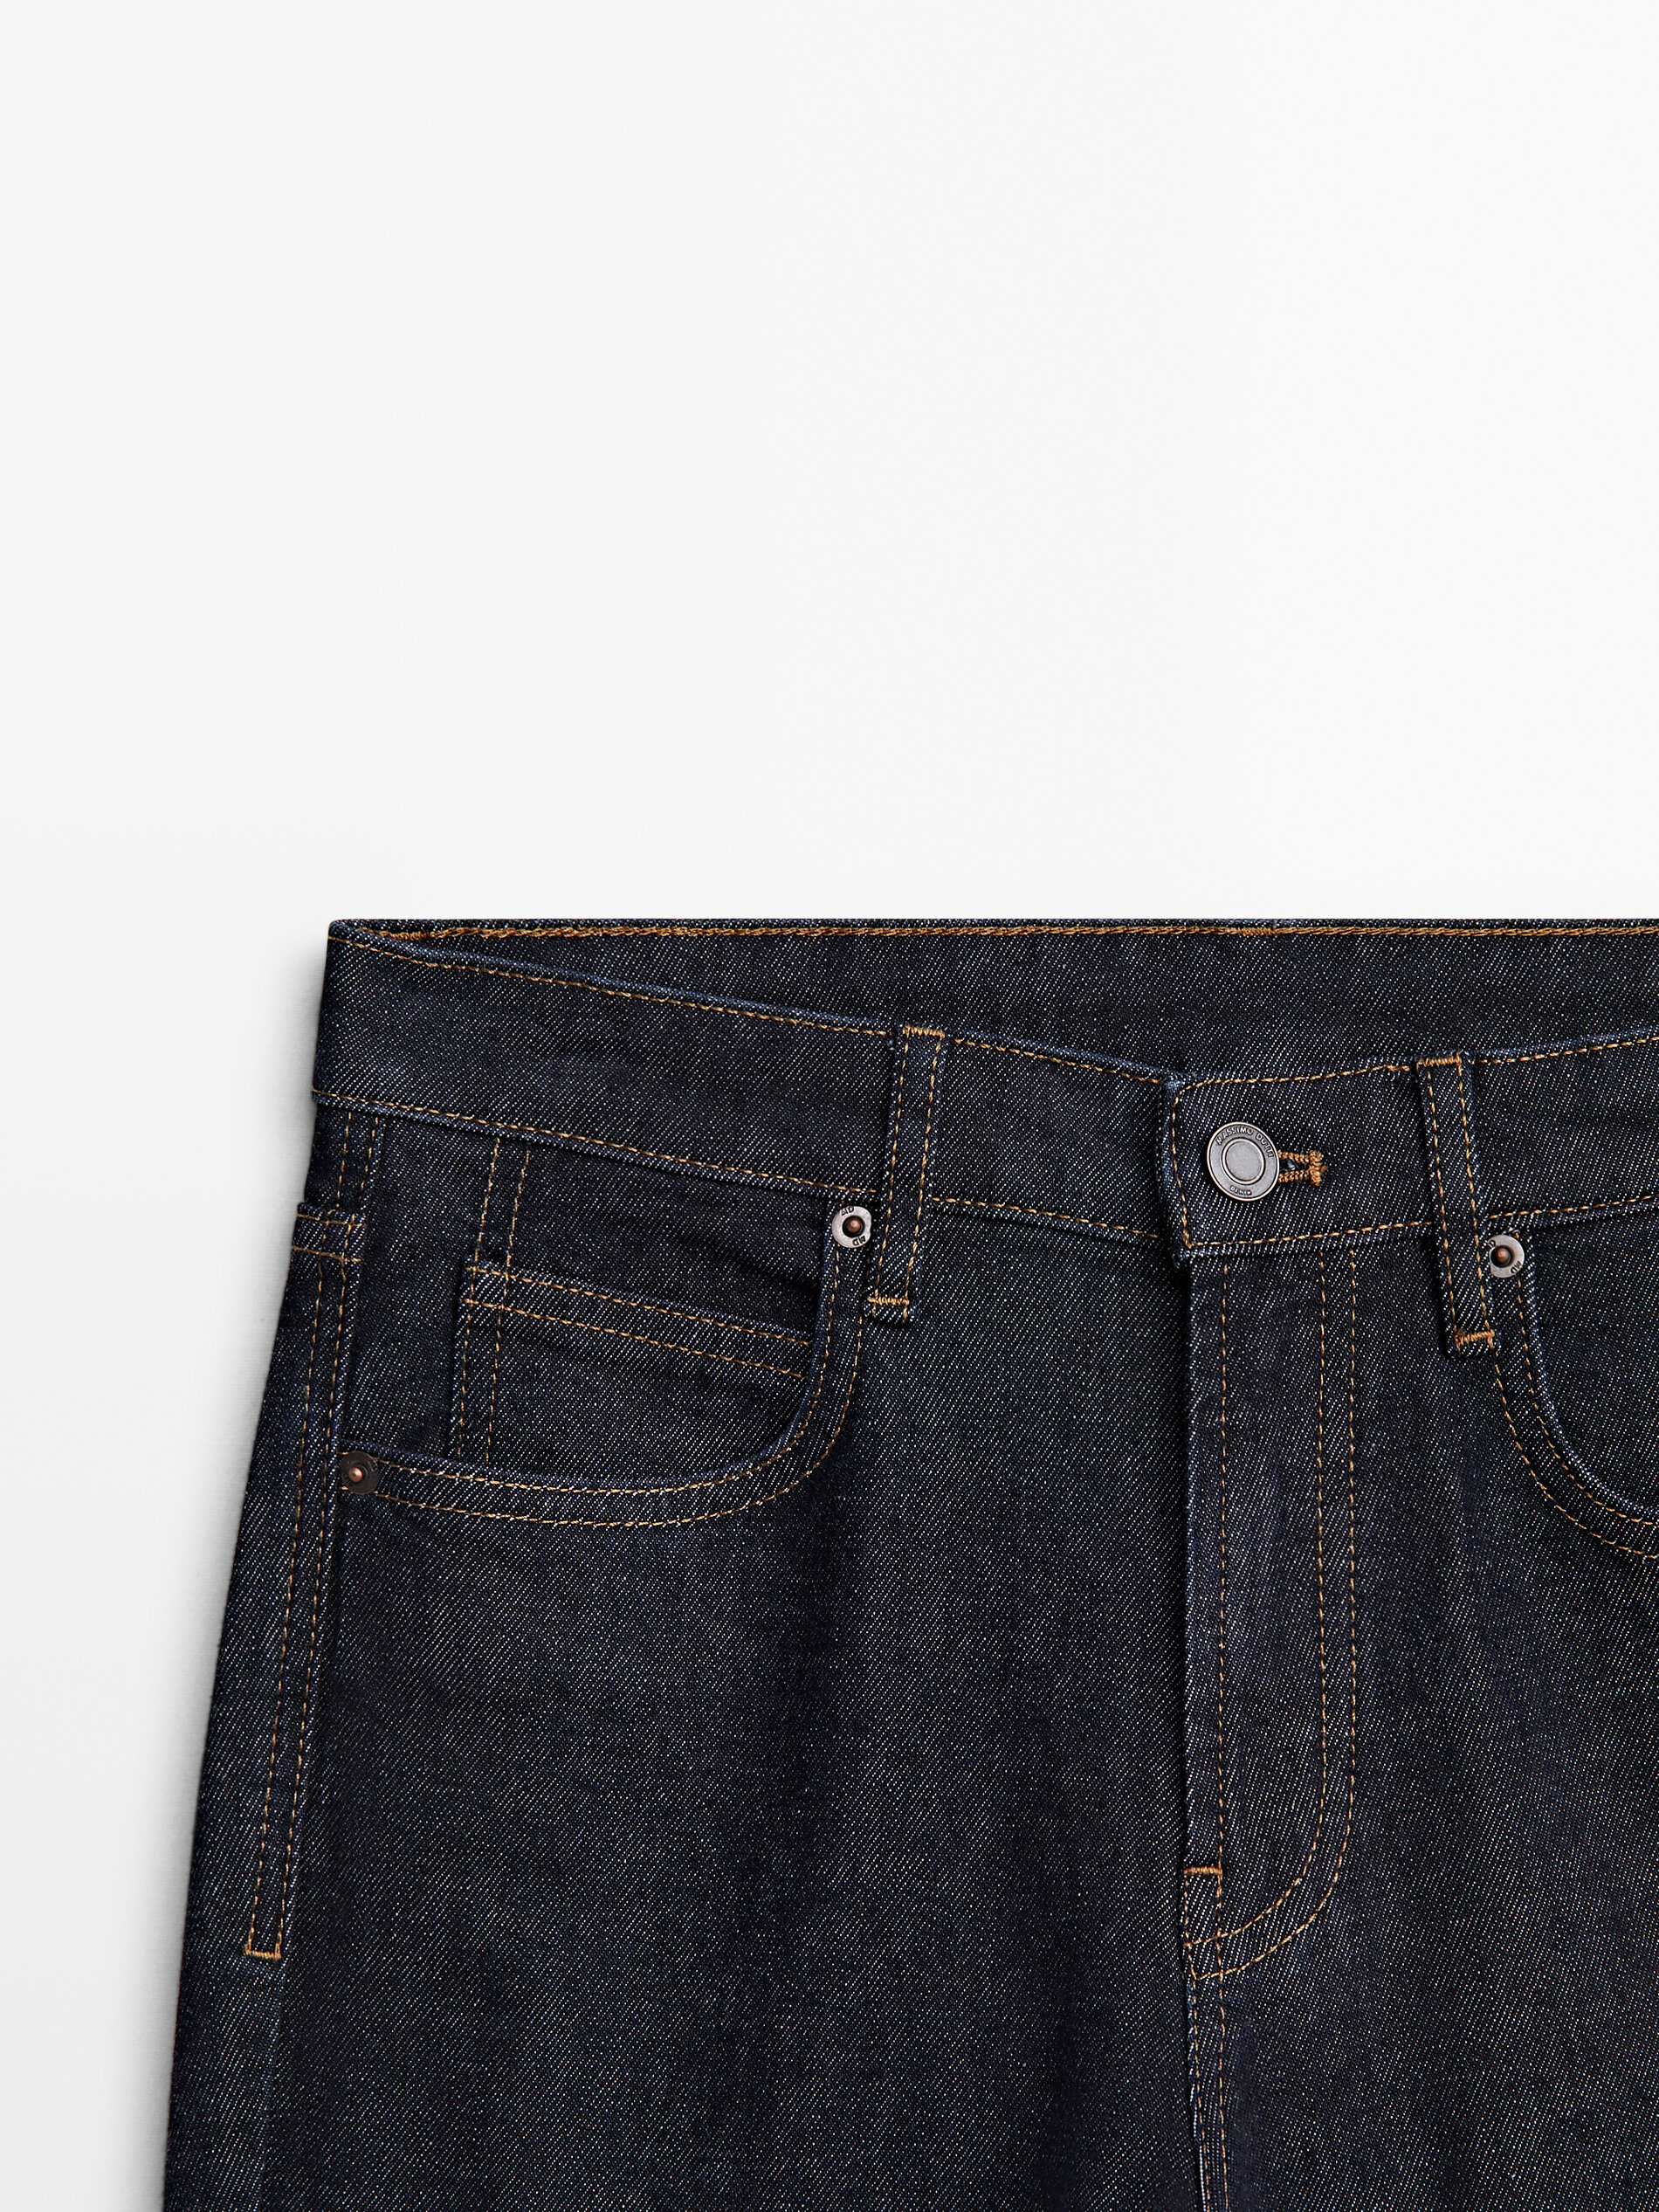 Jeans tiro medio slim cropped fit confort